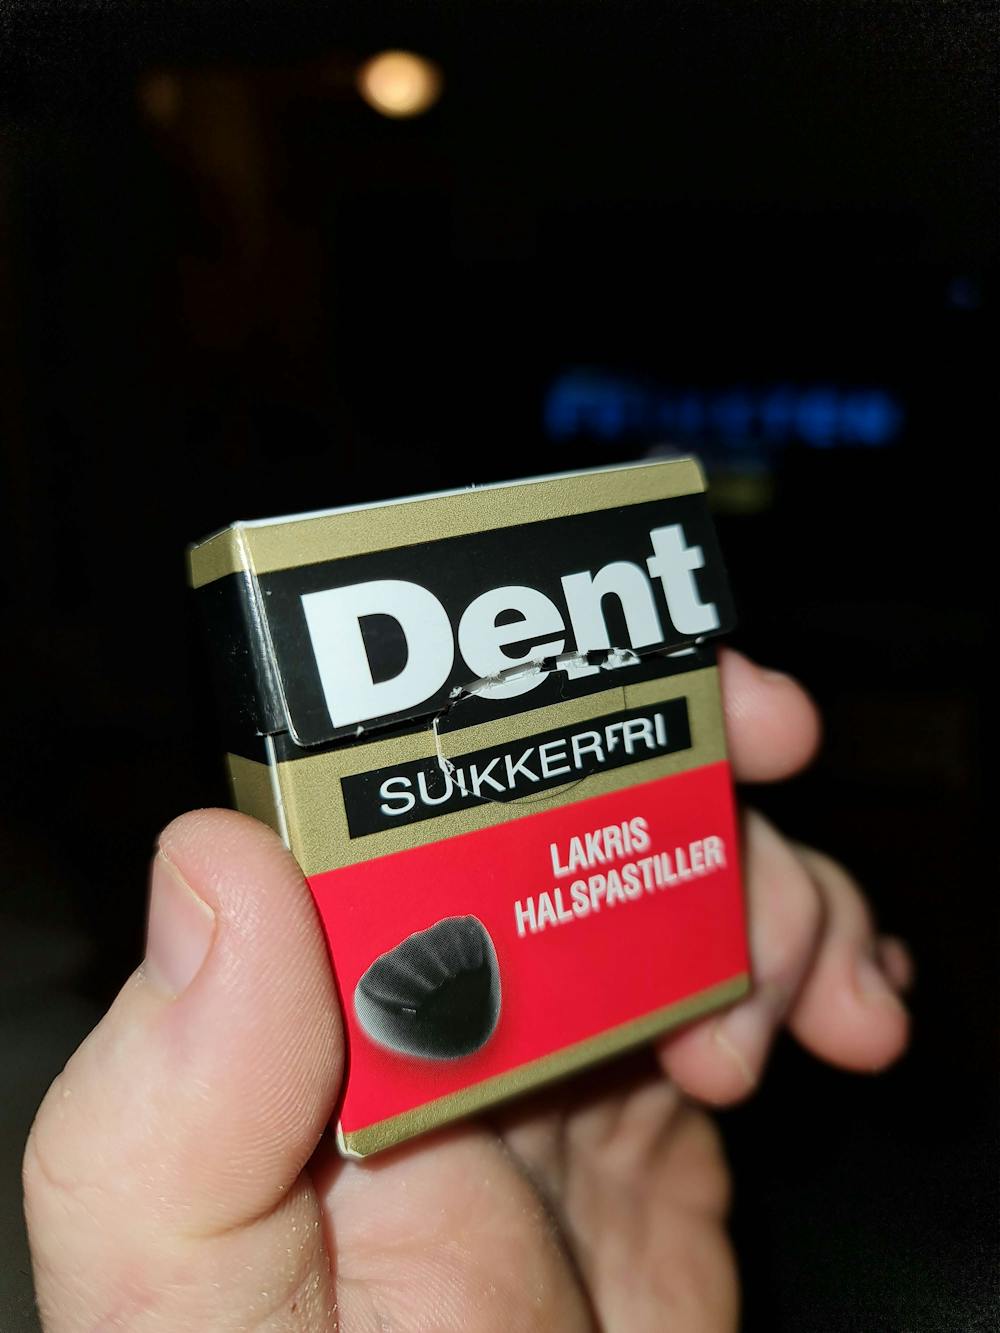 Dent sukkerfri, Dent